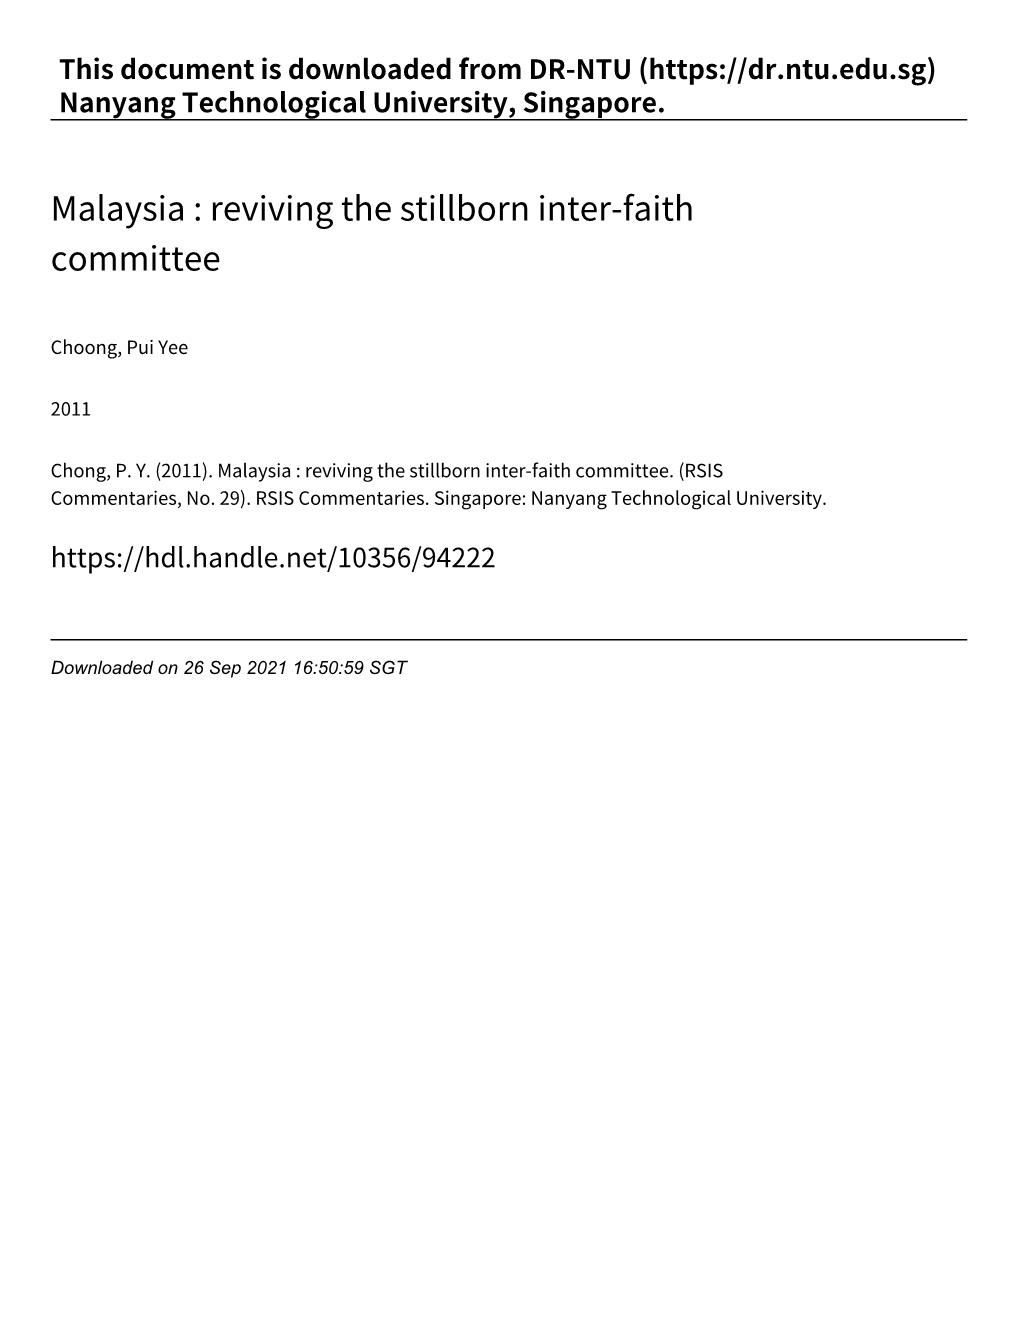 Malaysia : Reviving the Stillborn Inter‑Faith Committee